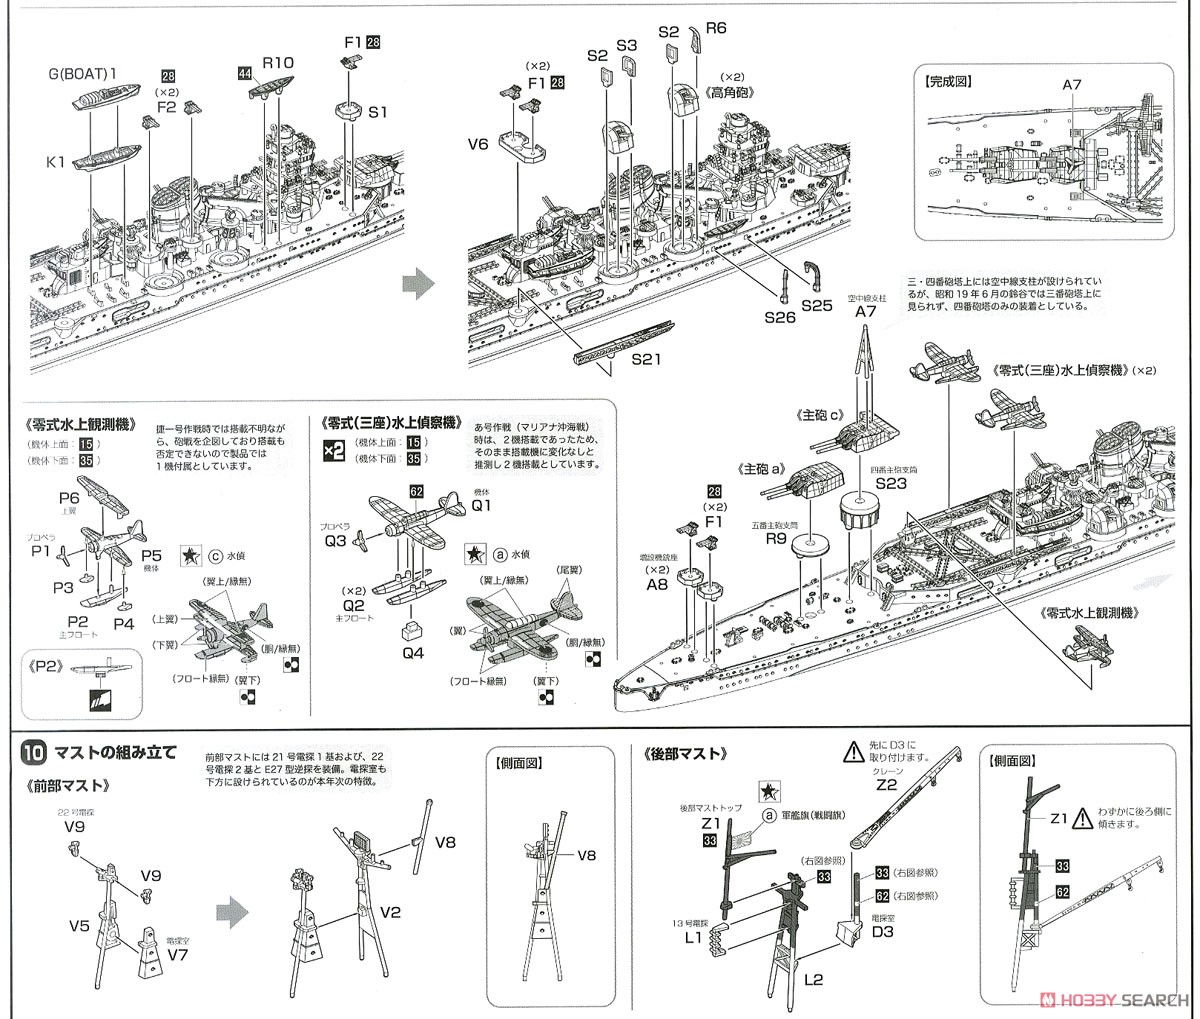 日本海軍重巡洋艦 鈴谷 (昭和19年/捷一号作戦) (プラモデル) 設計図4